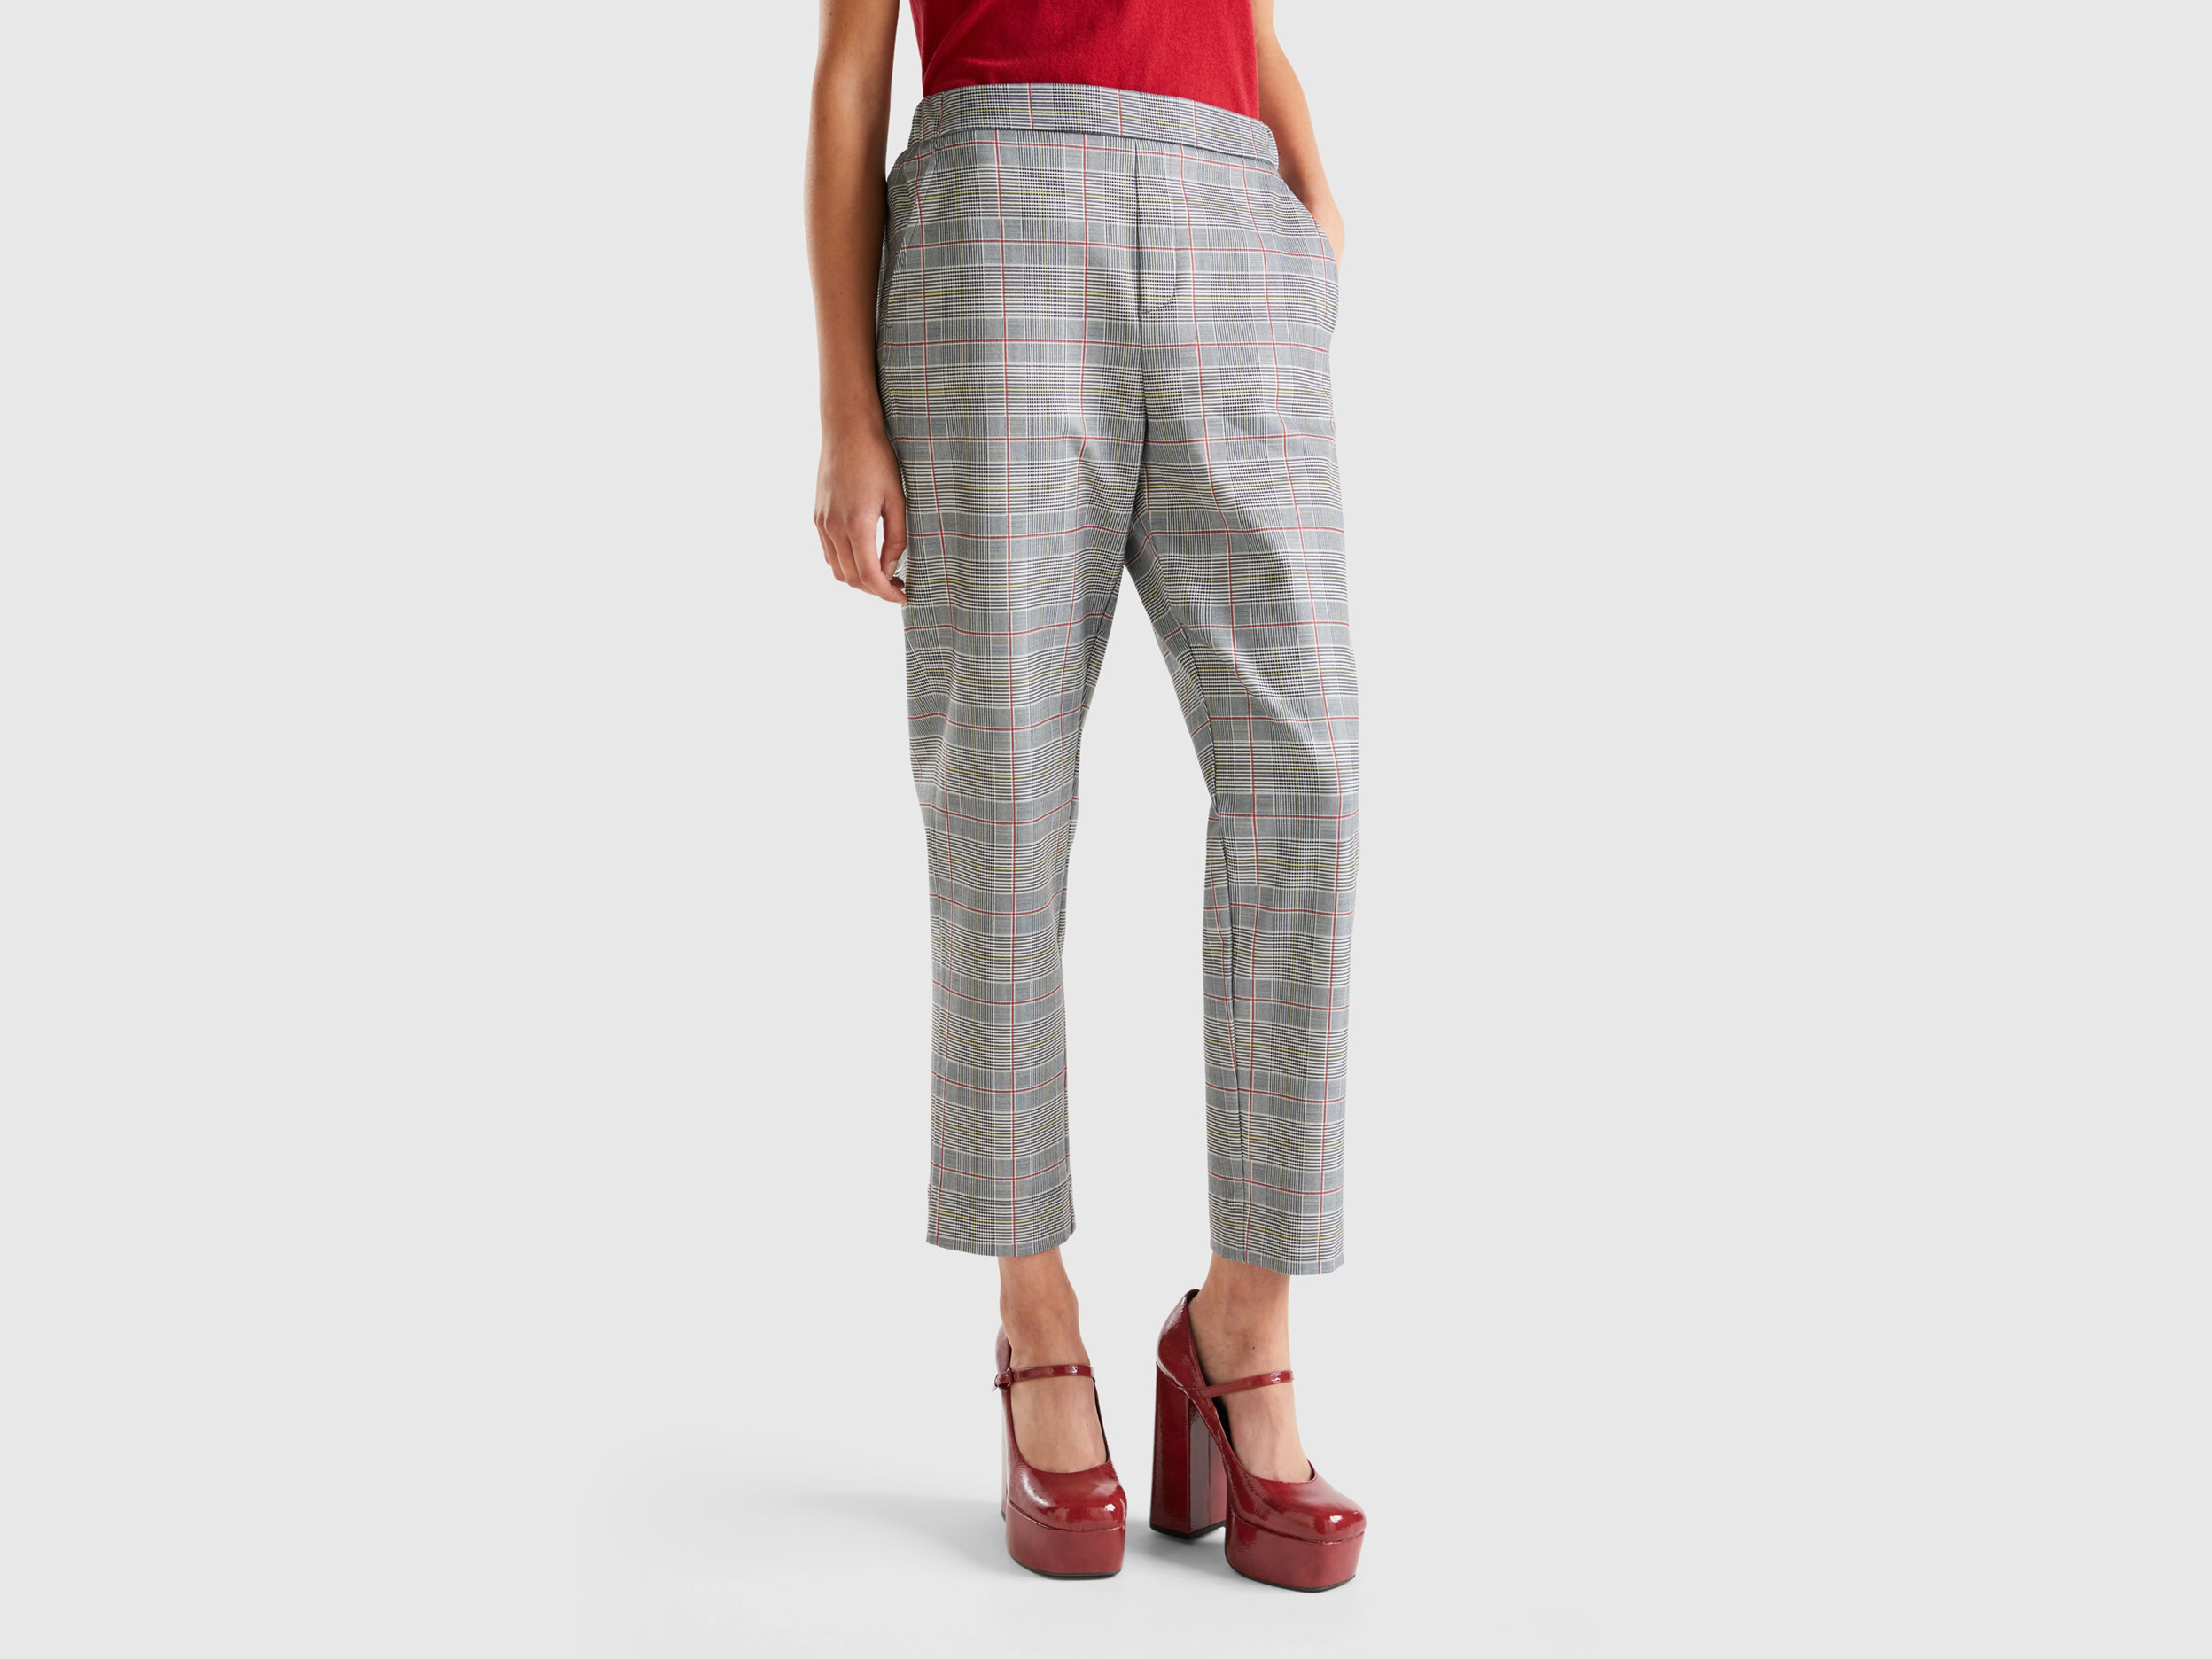 Benetton, Patterned Pants With Elastic Waist, size L, Light Gray, Women